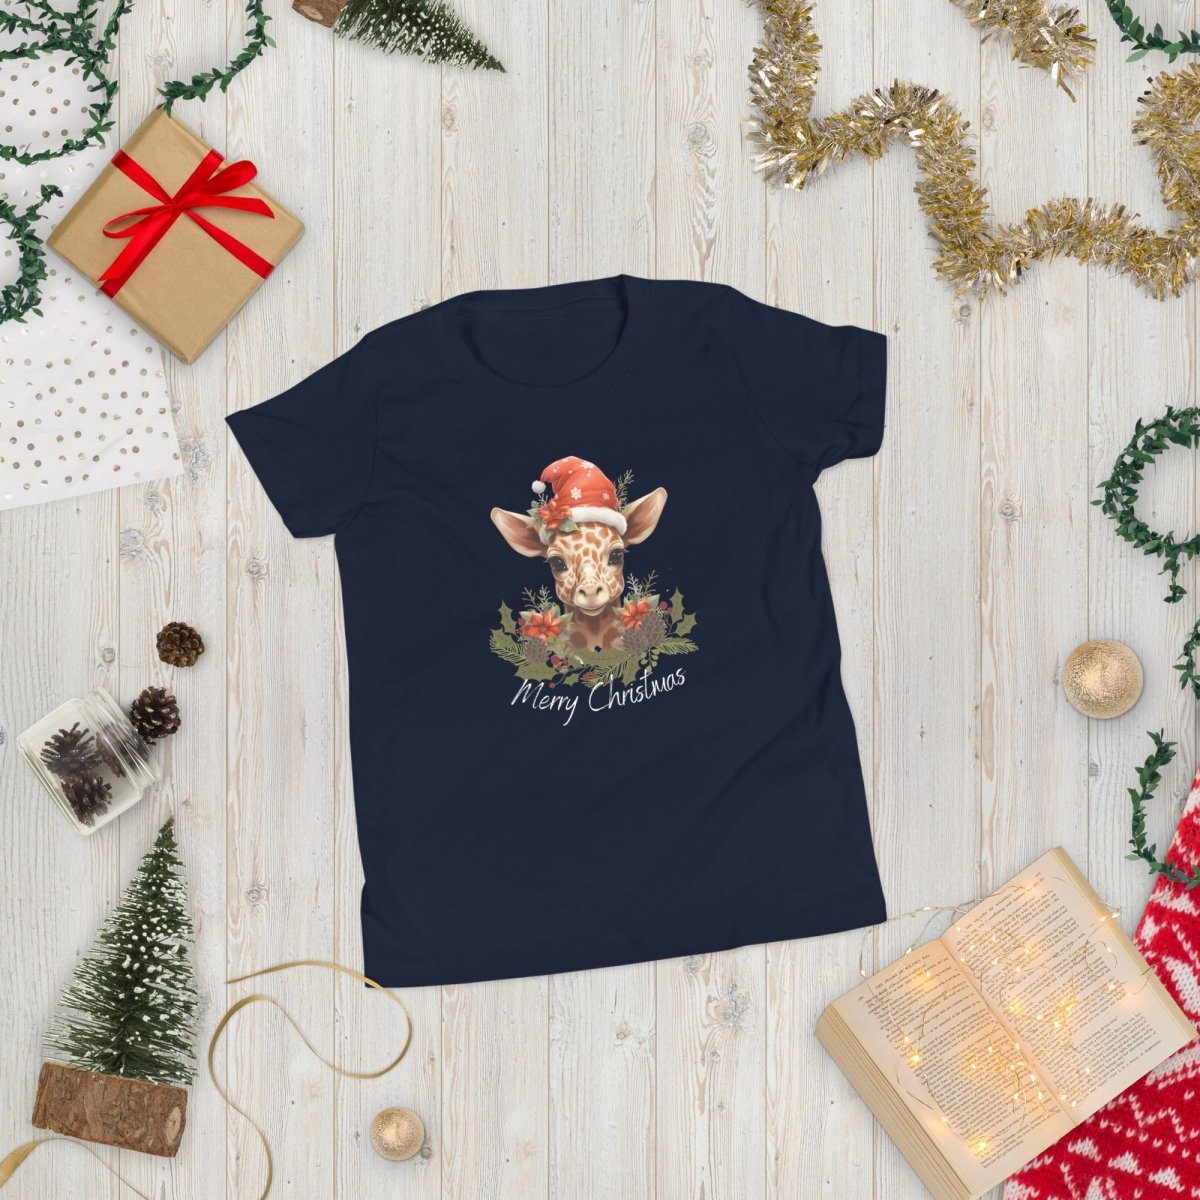 Christmas Giraffe T-Shirt - High Quality Festive Family Teenager T-Shirt, Gift for Giraffe Lovers, Cute Christmas Shirt, Youth Xmas Tee - Everything Pixel